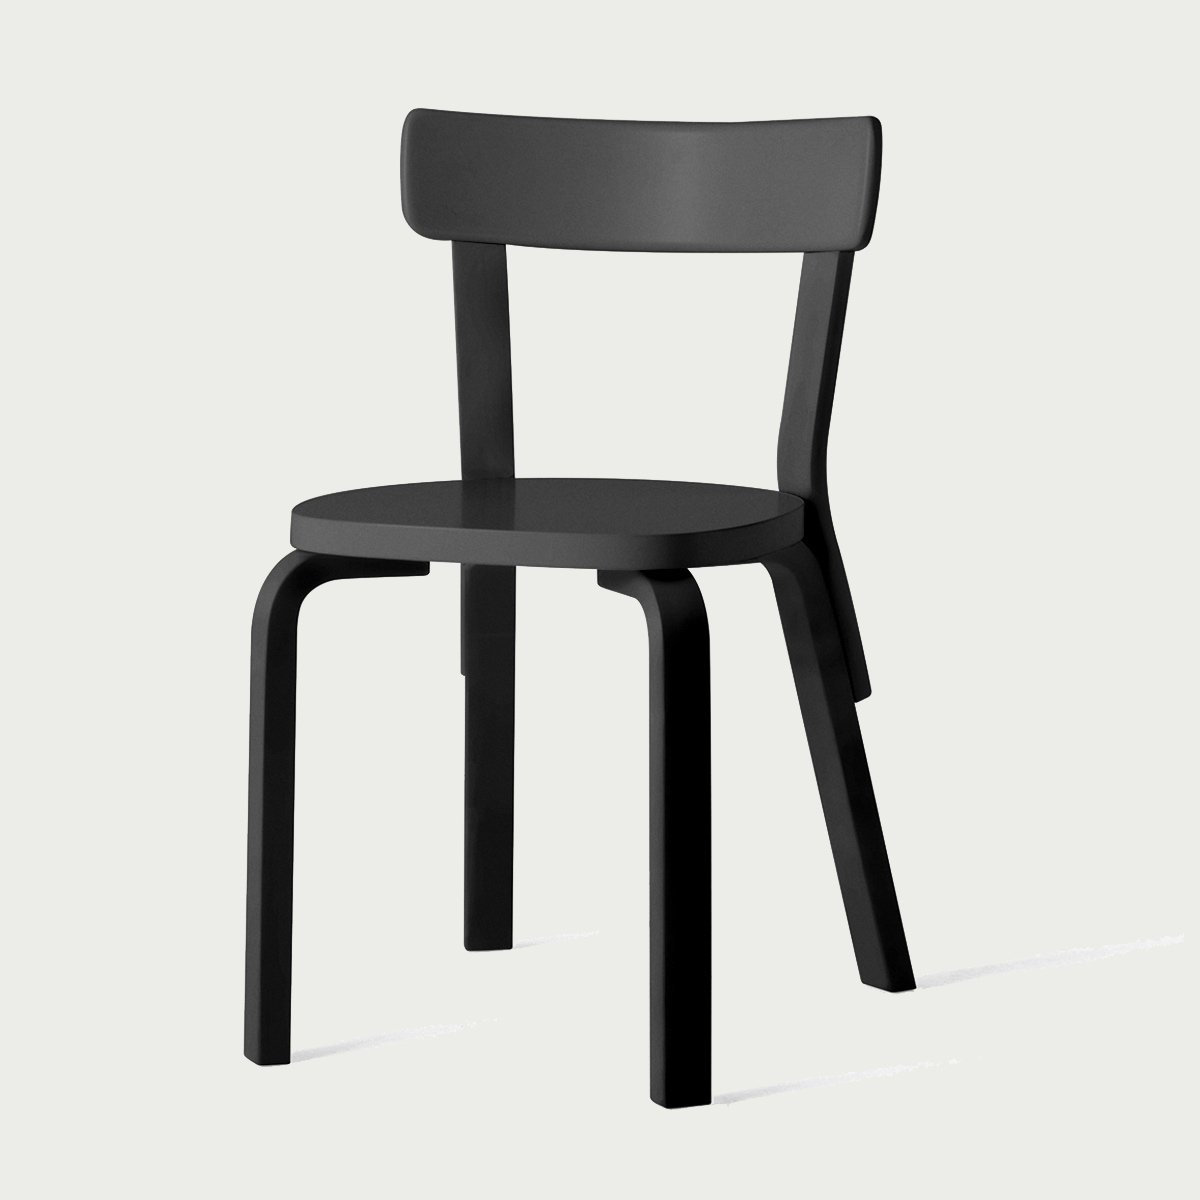 Chair 69, Алвар Аалто